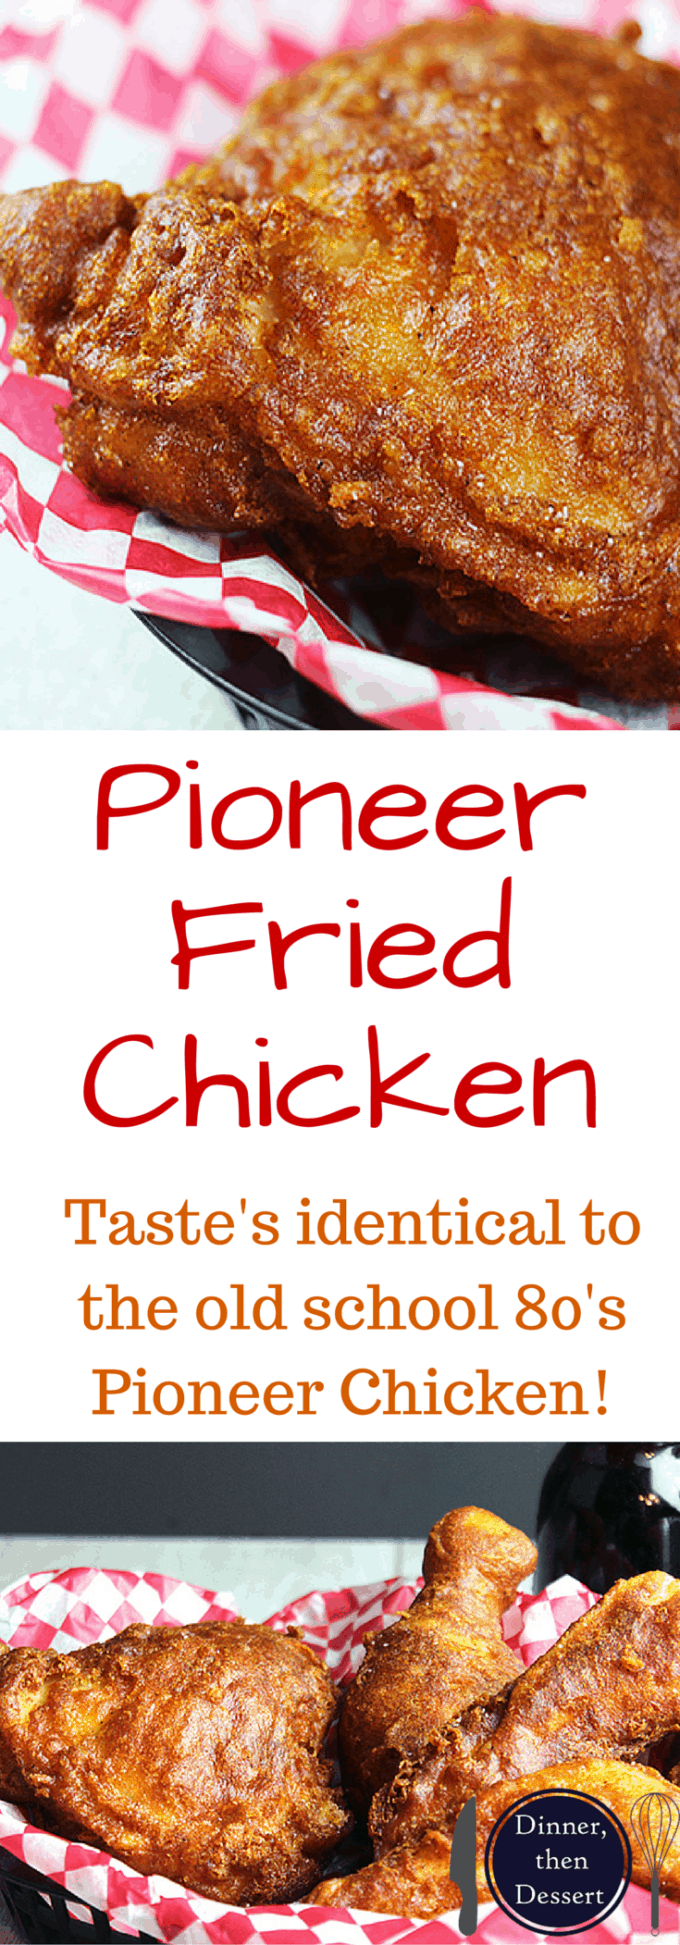 Pioneer Take Out Fried Chicken Dinner Then Dessert